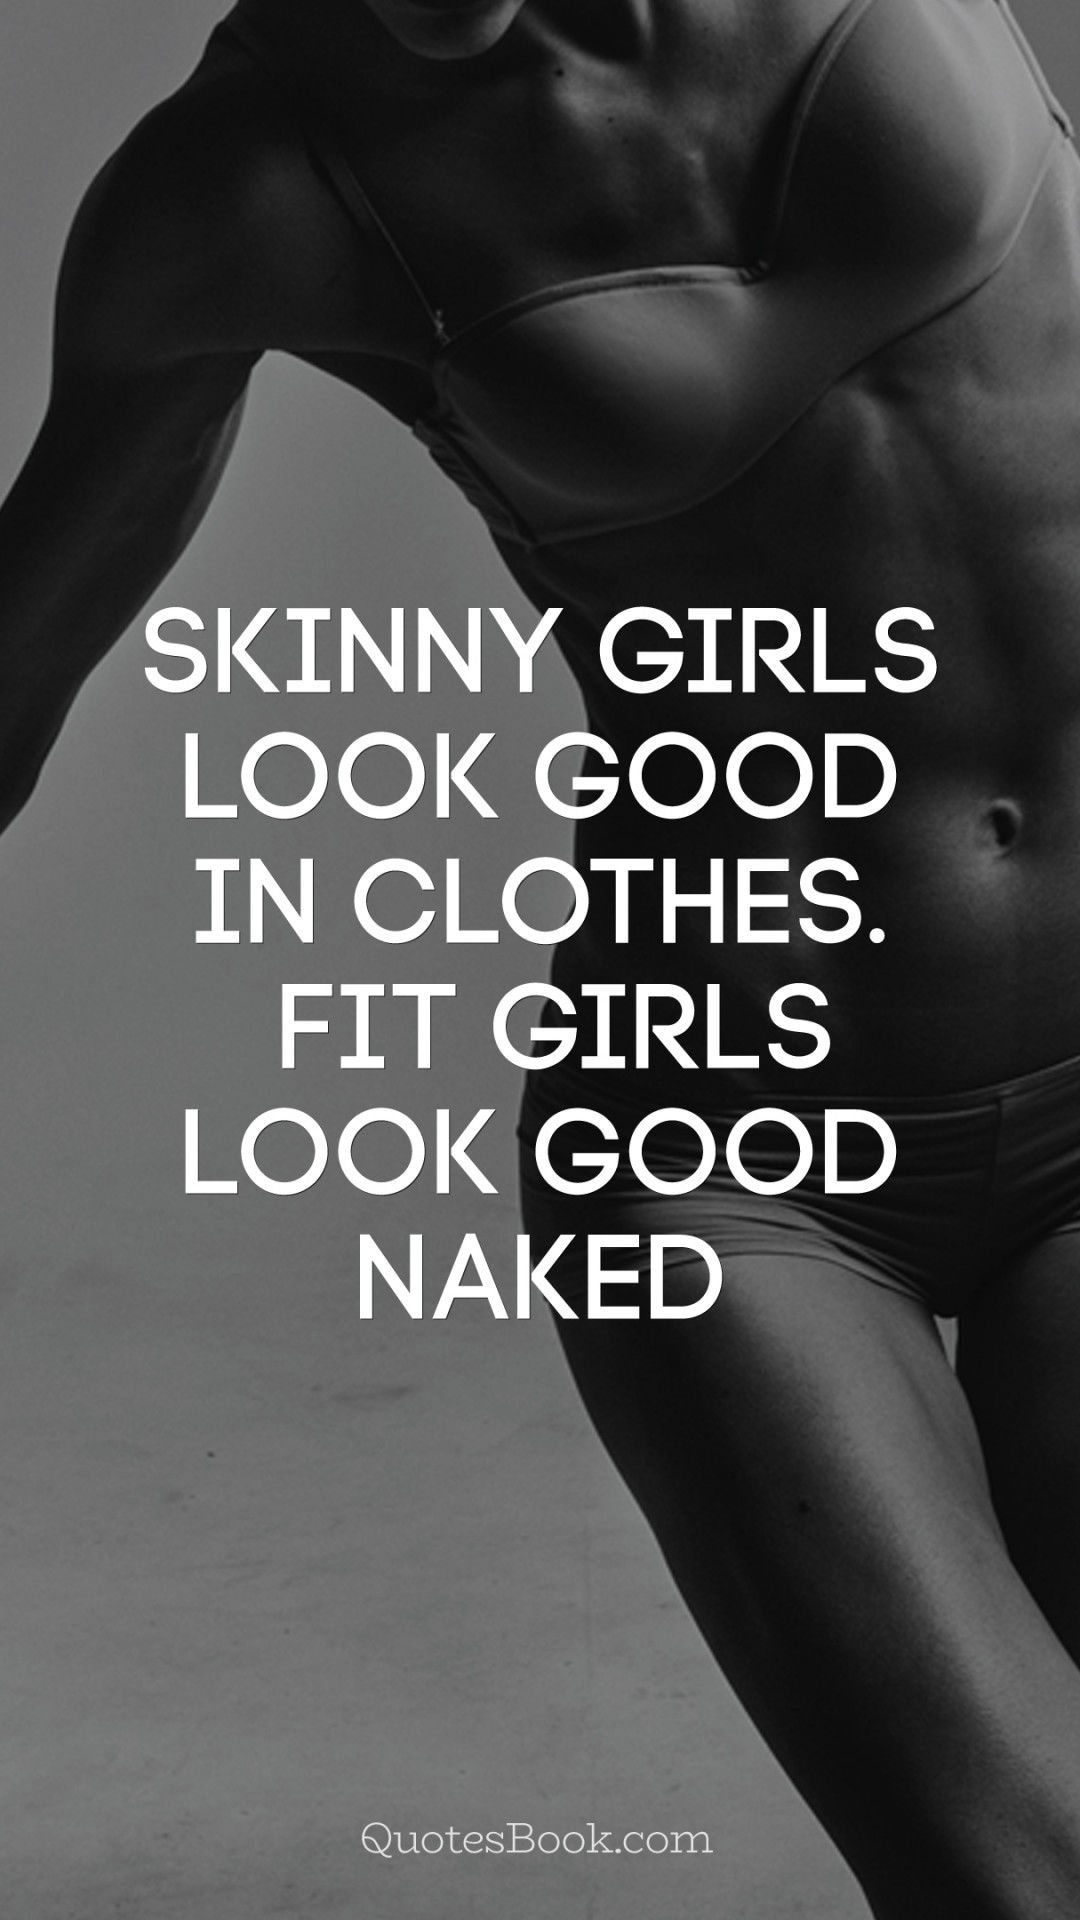 Skinny Girls Naked